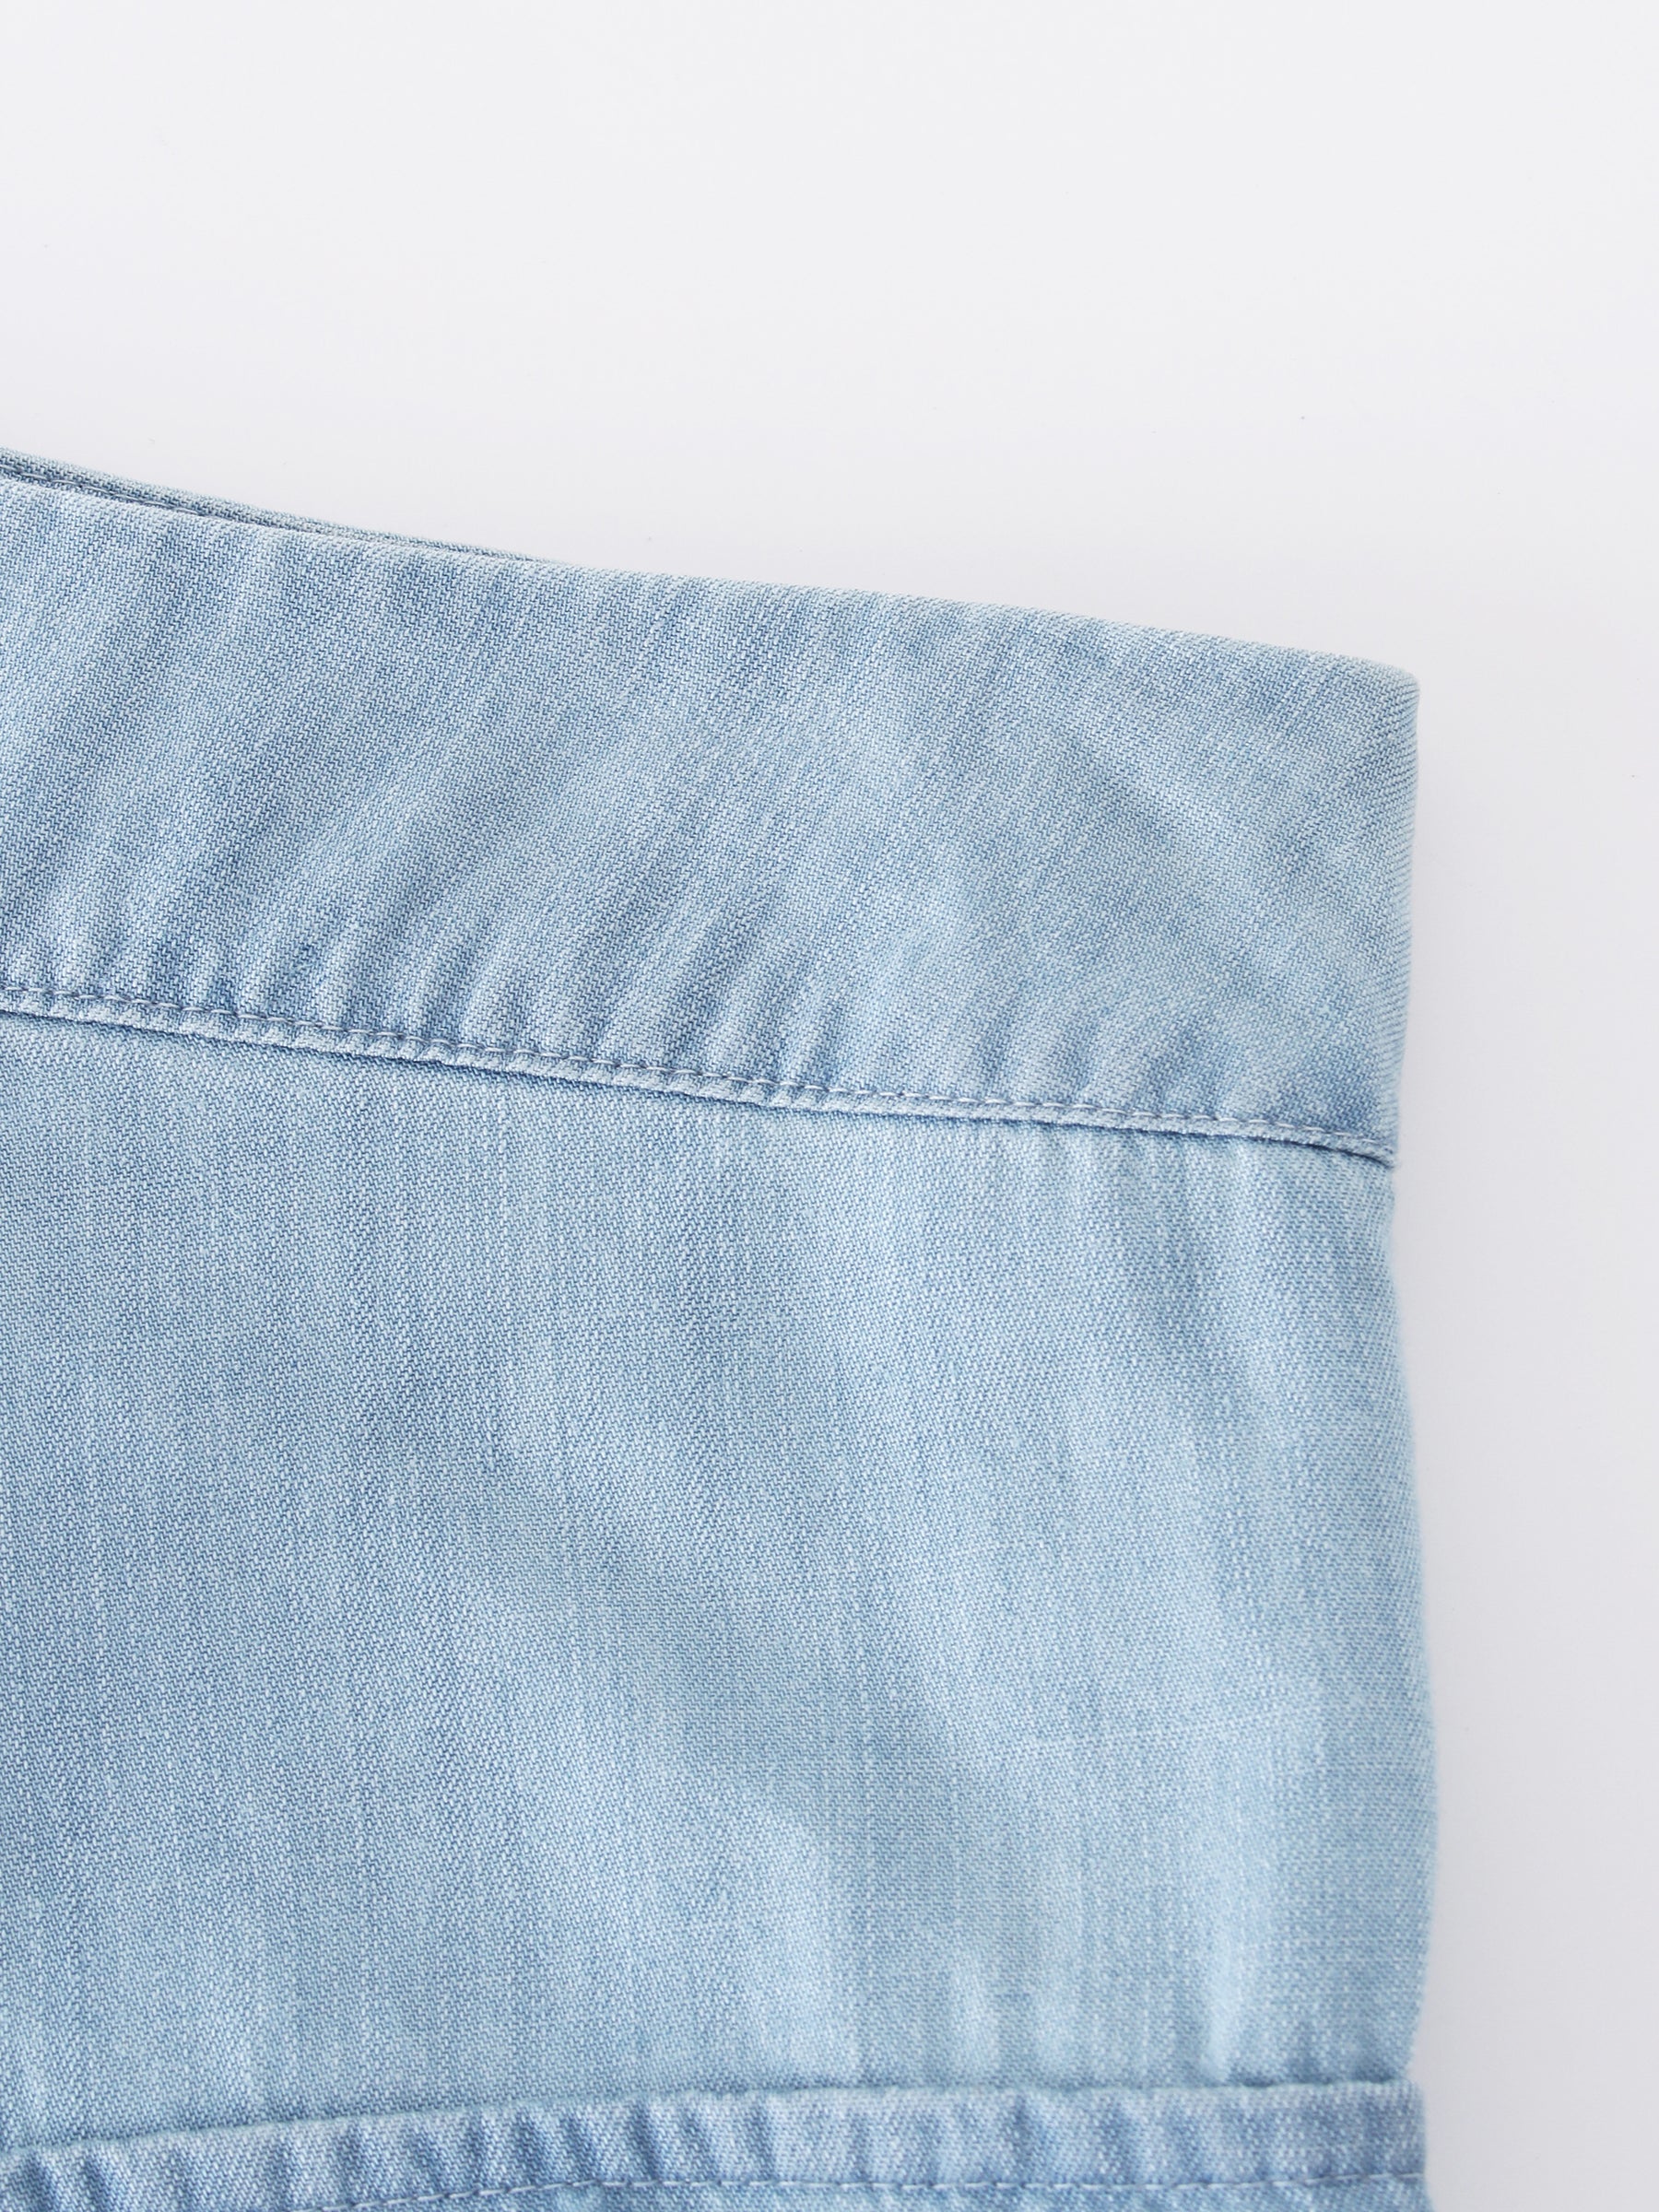 Button Cargo Pocket Skirt-Denim